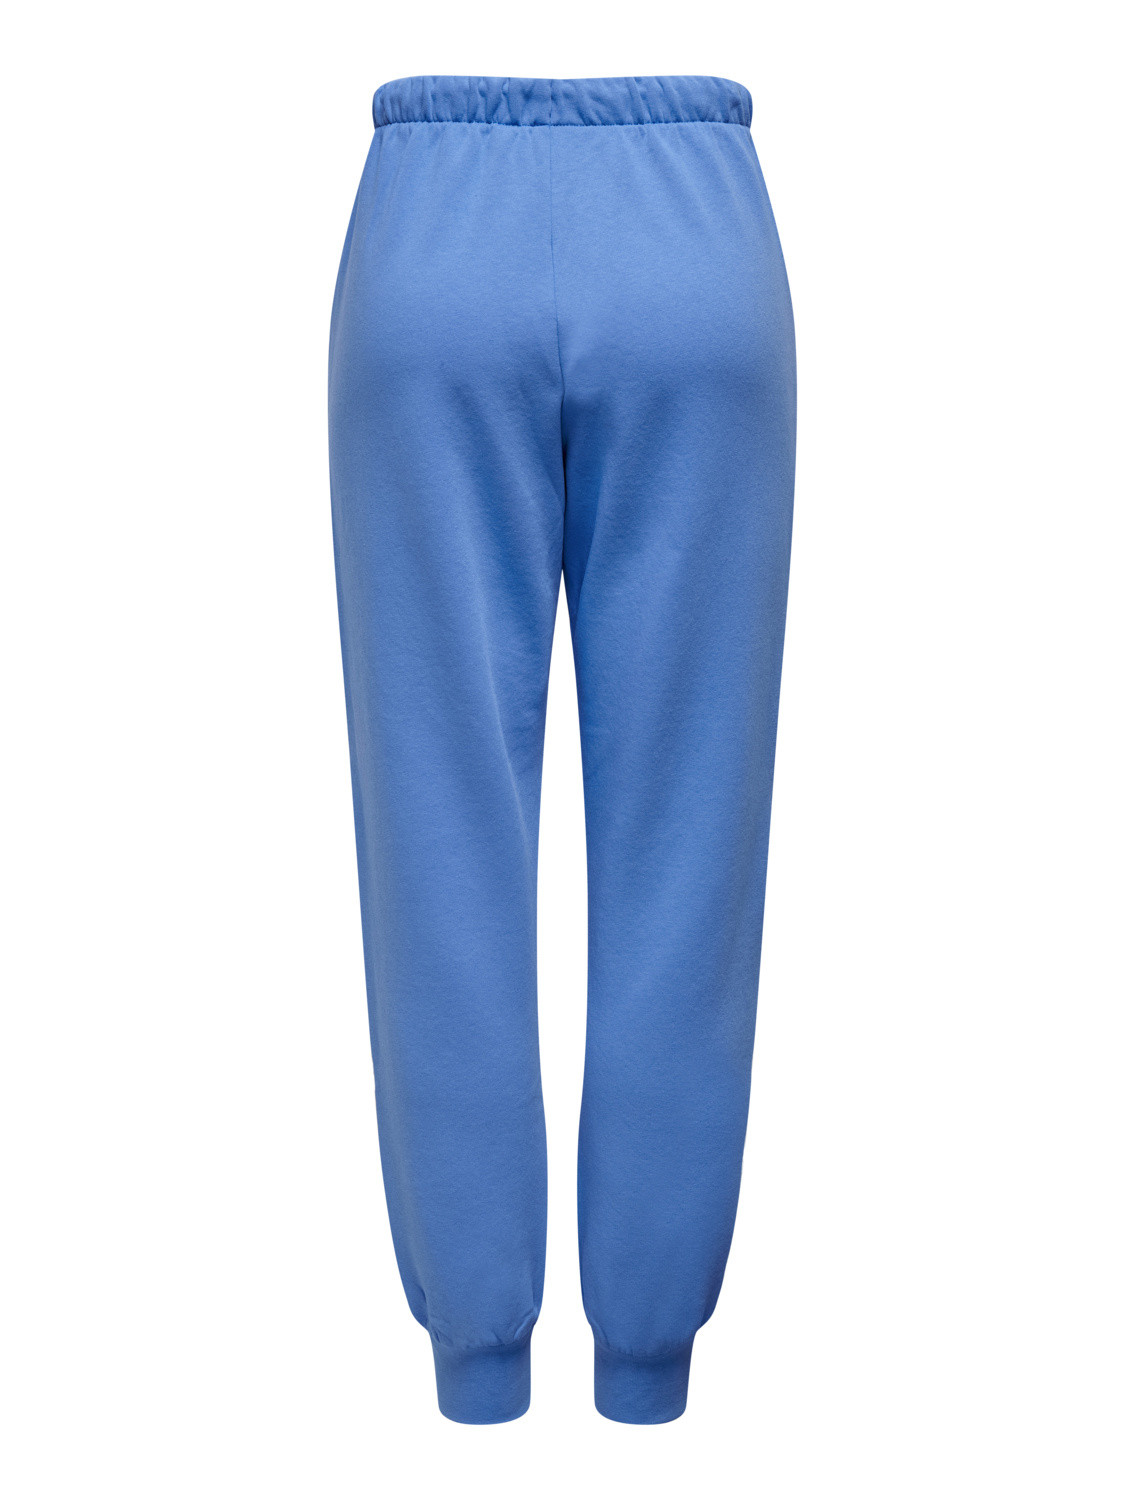 Pantaloni tuta donna, Azzurro, large image number 1